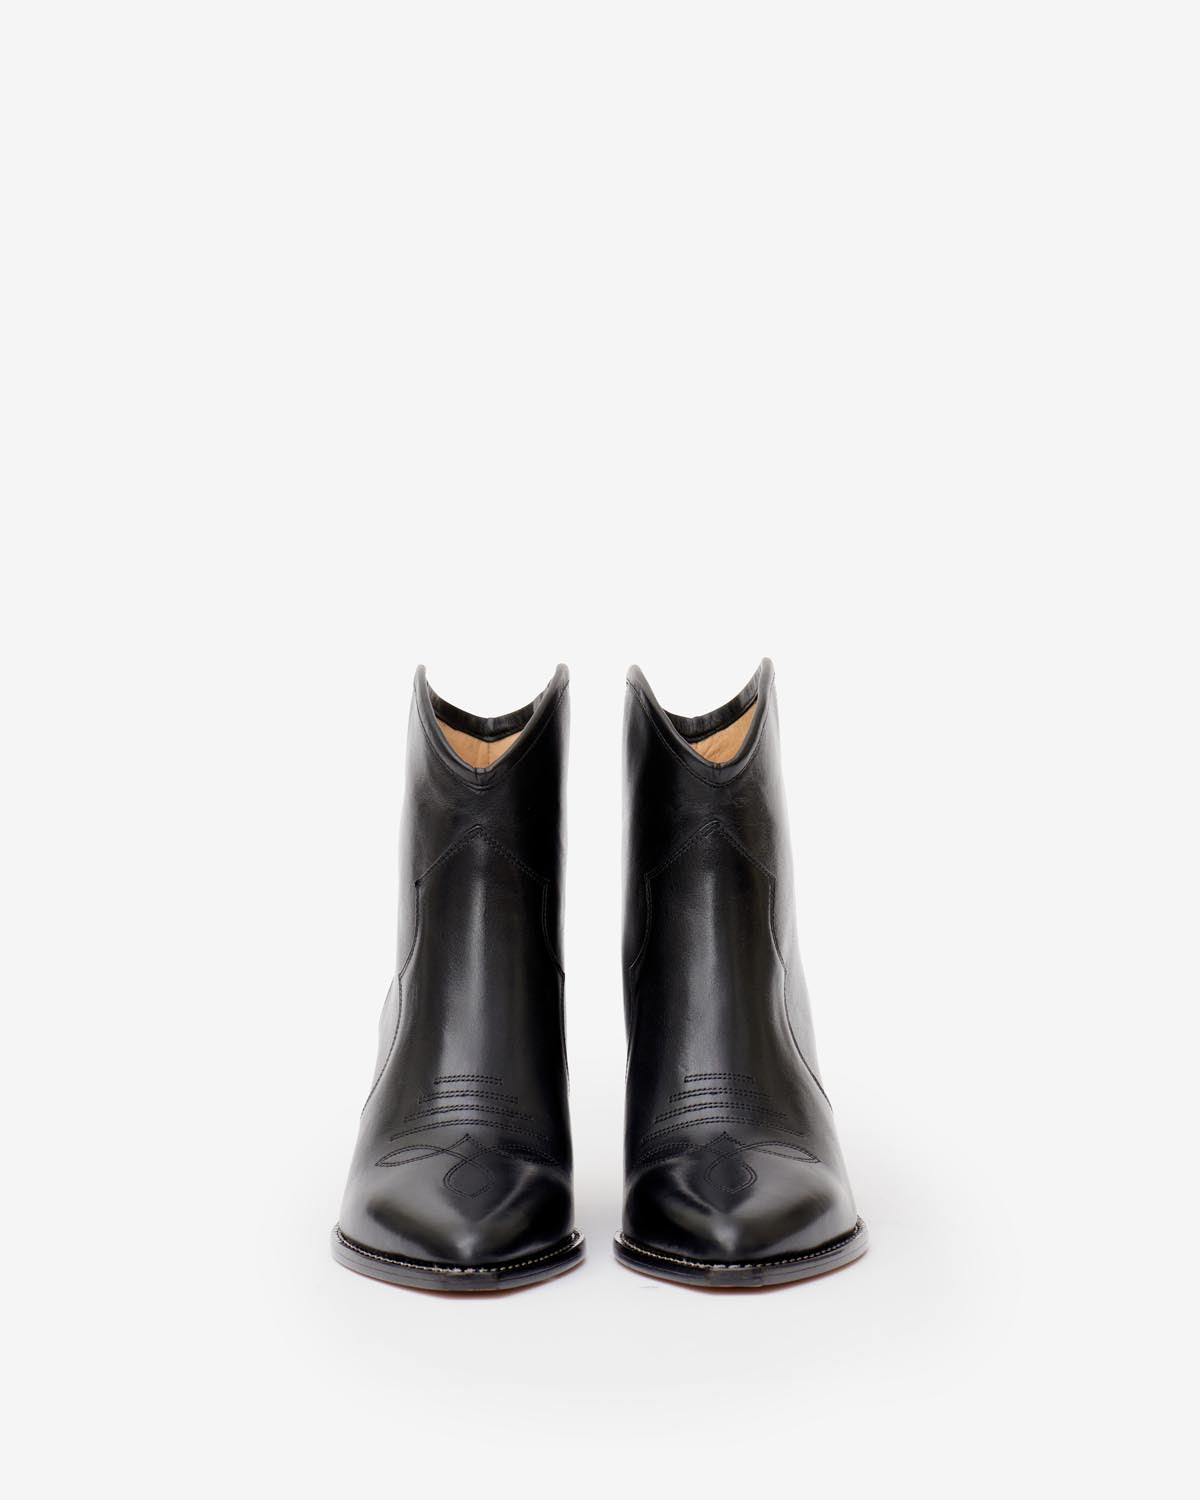 Boots darizo Woman Noir 1